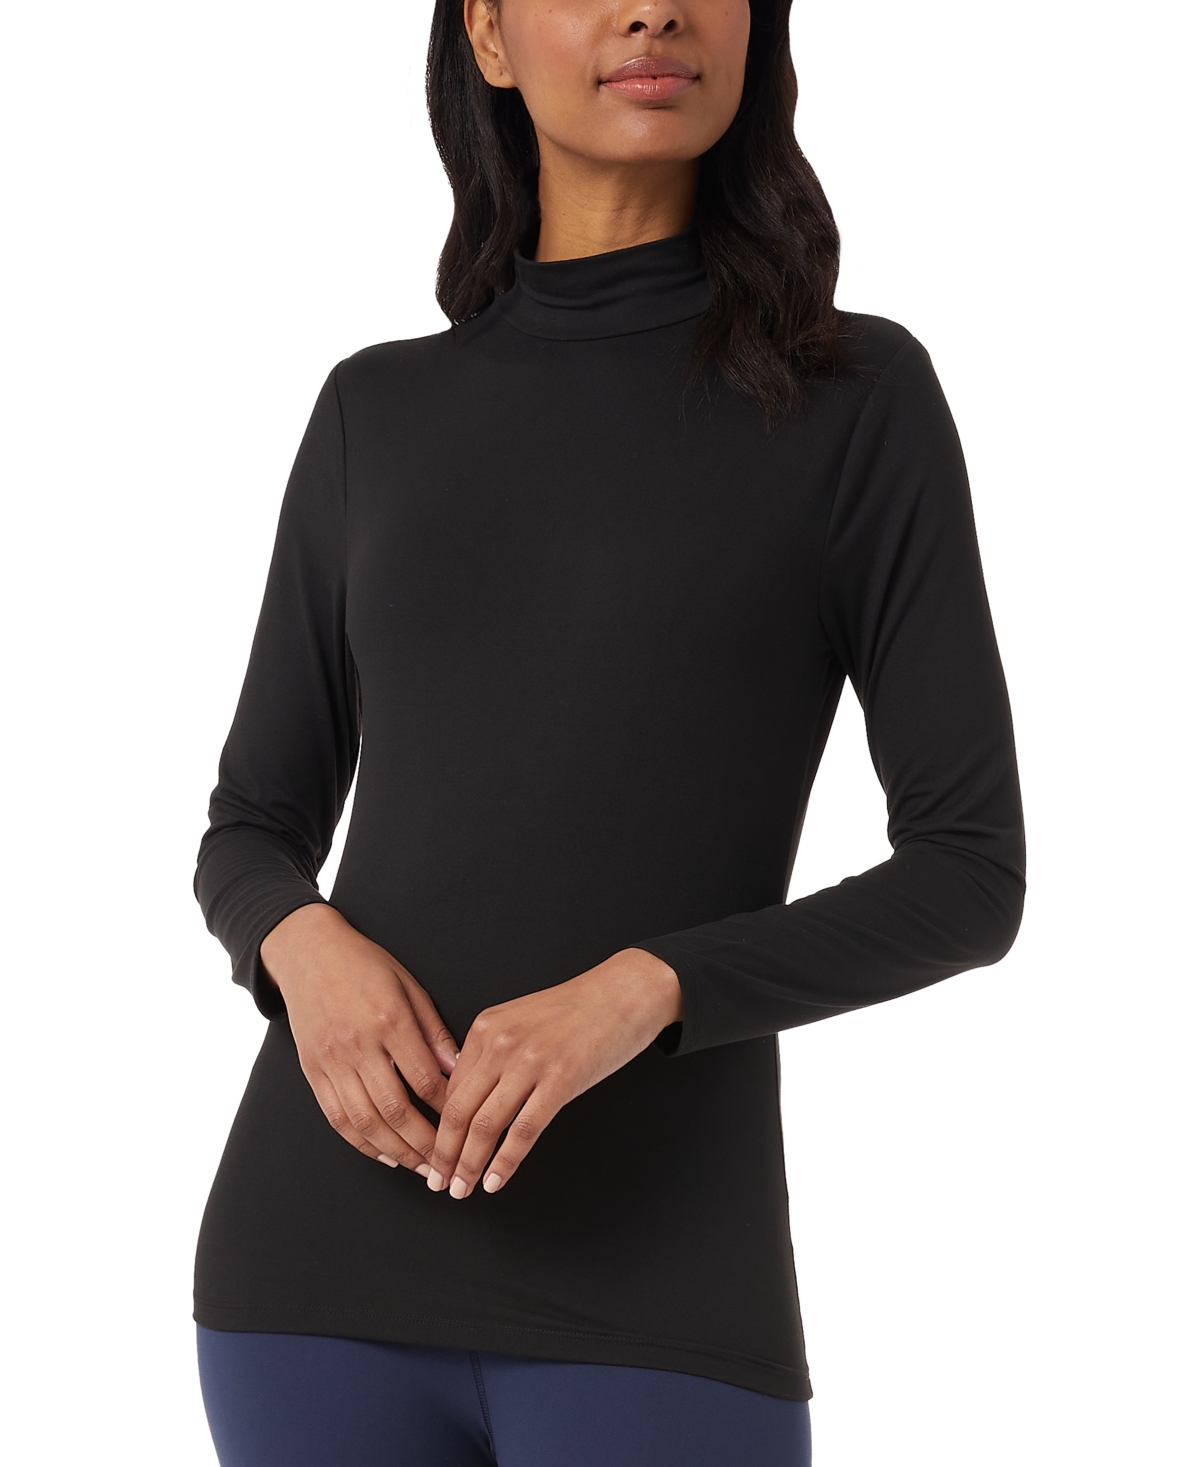 32 Degrees Women's Mock-neck Long-sleeve Top In Black